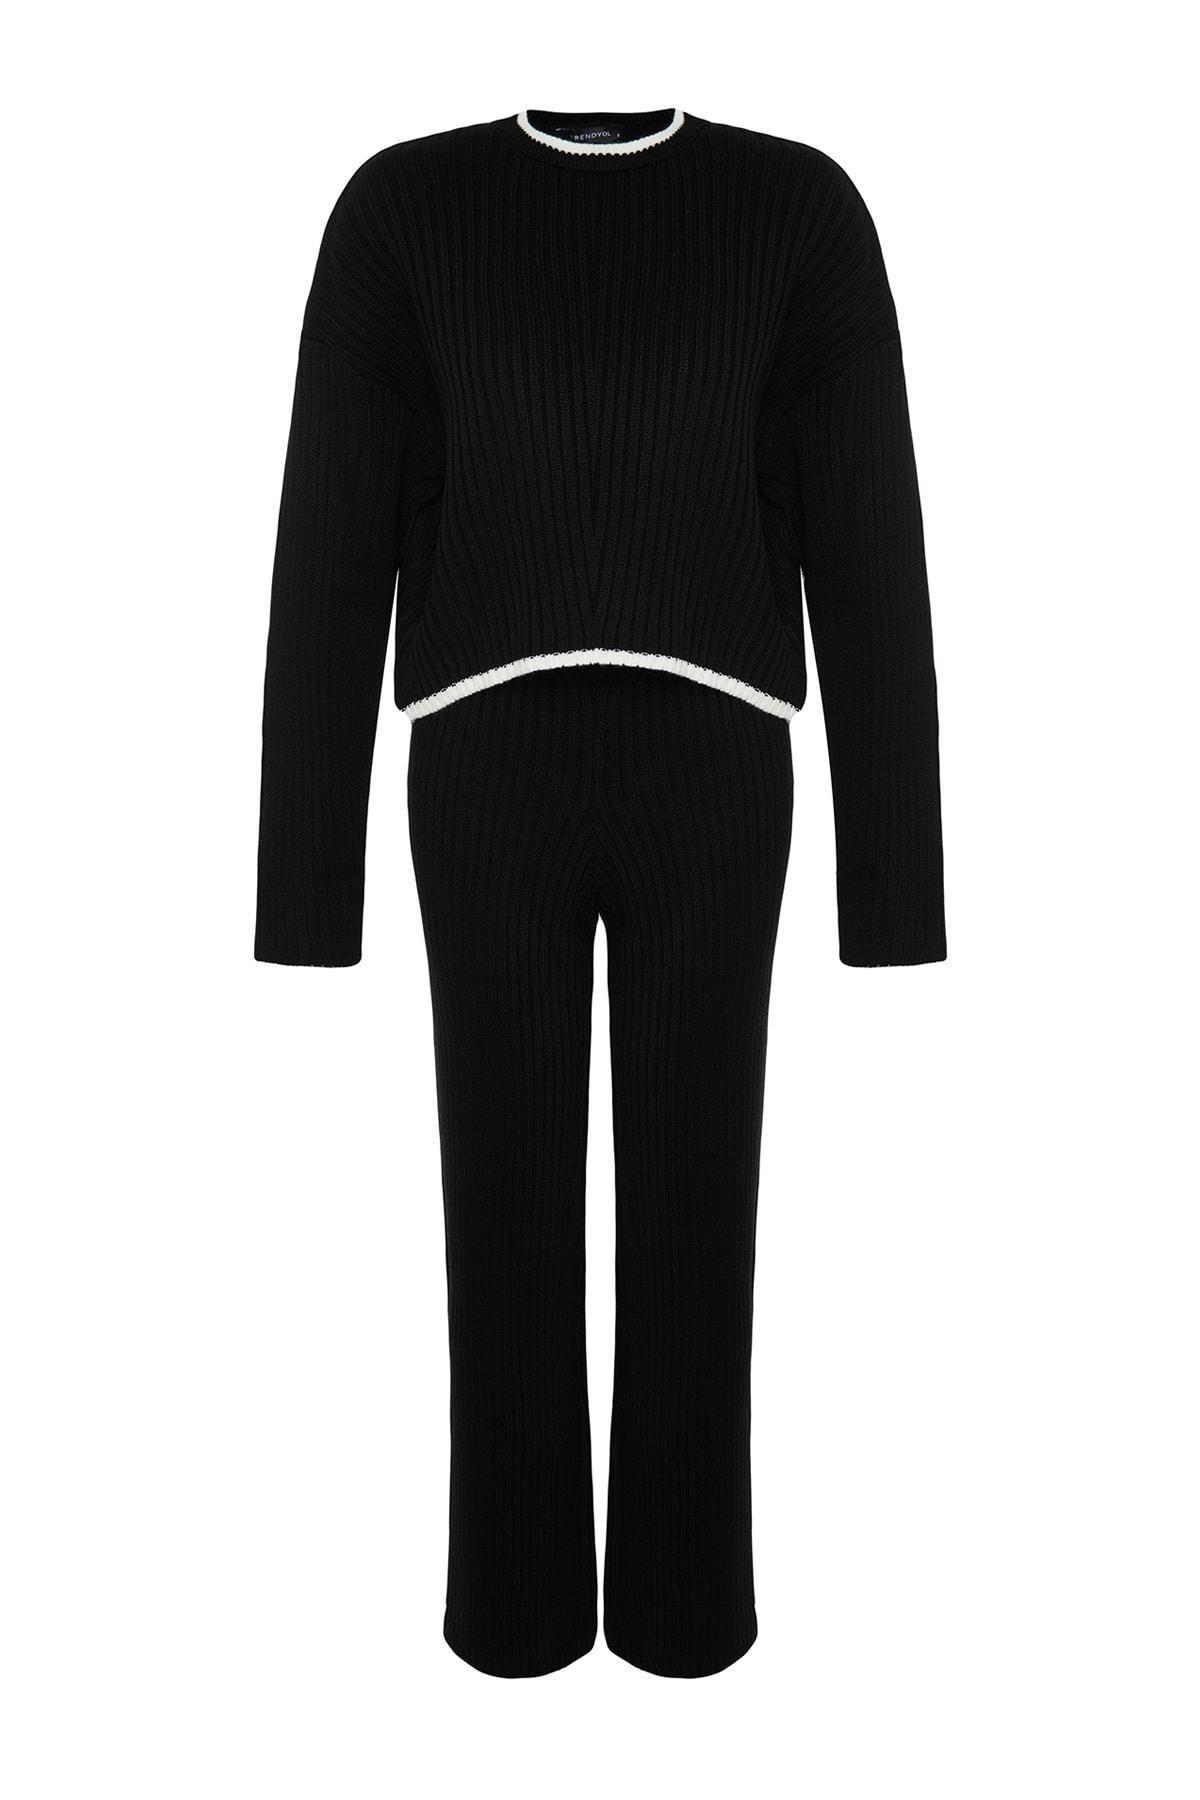 Trendyol - Black Corduroy Knitwear Pyjamas Set